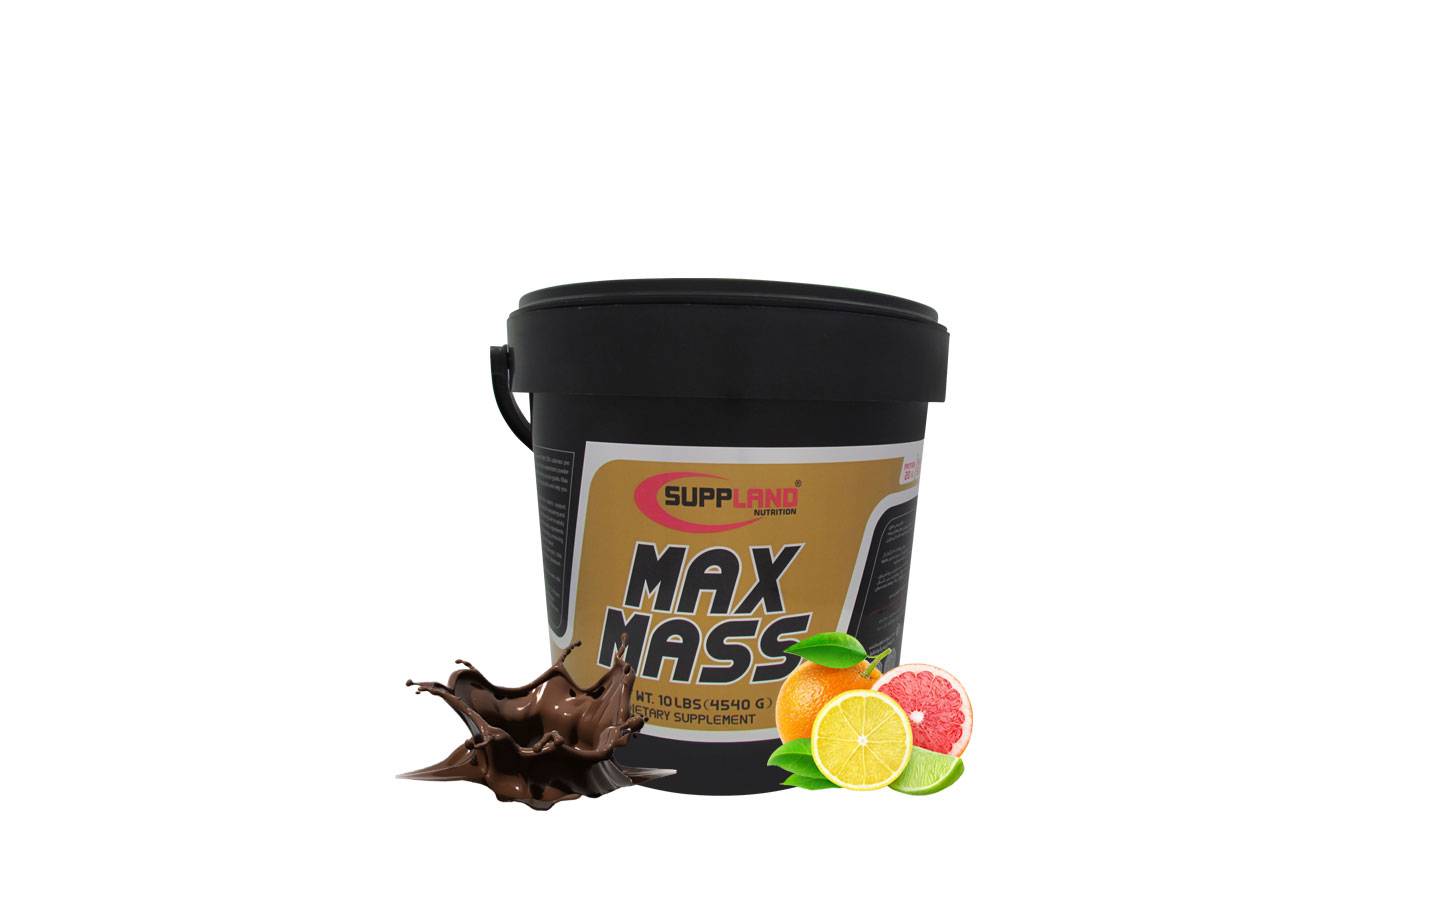 پودر مکس مس ساپلند نوتریشن با طعم شکلات 4540 گرمی Suppland Nutrition Max Mass Powder 4540 gr